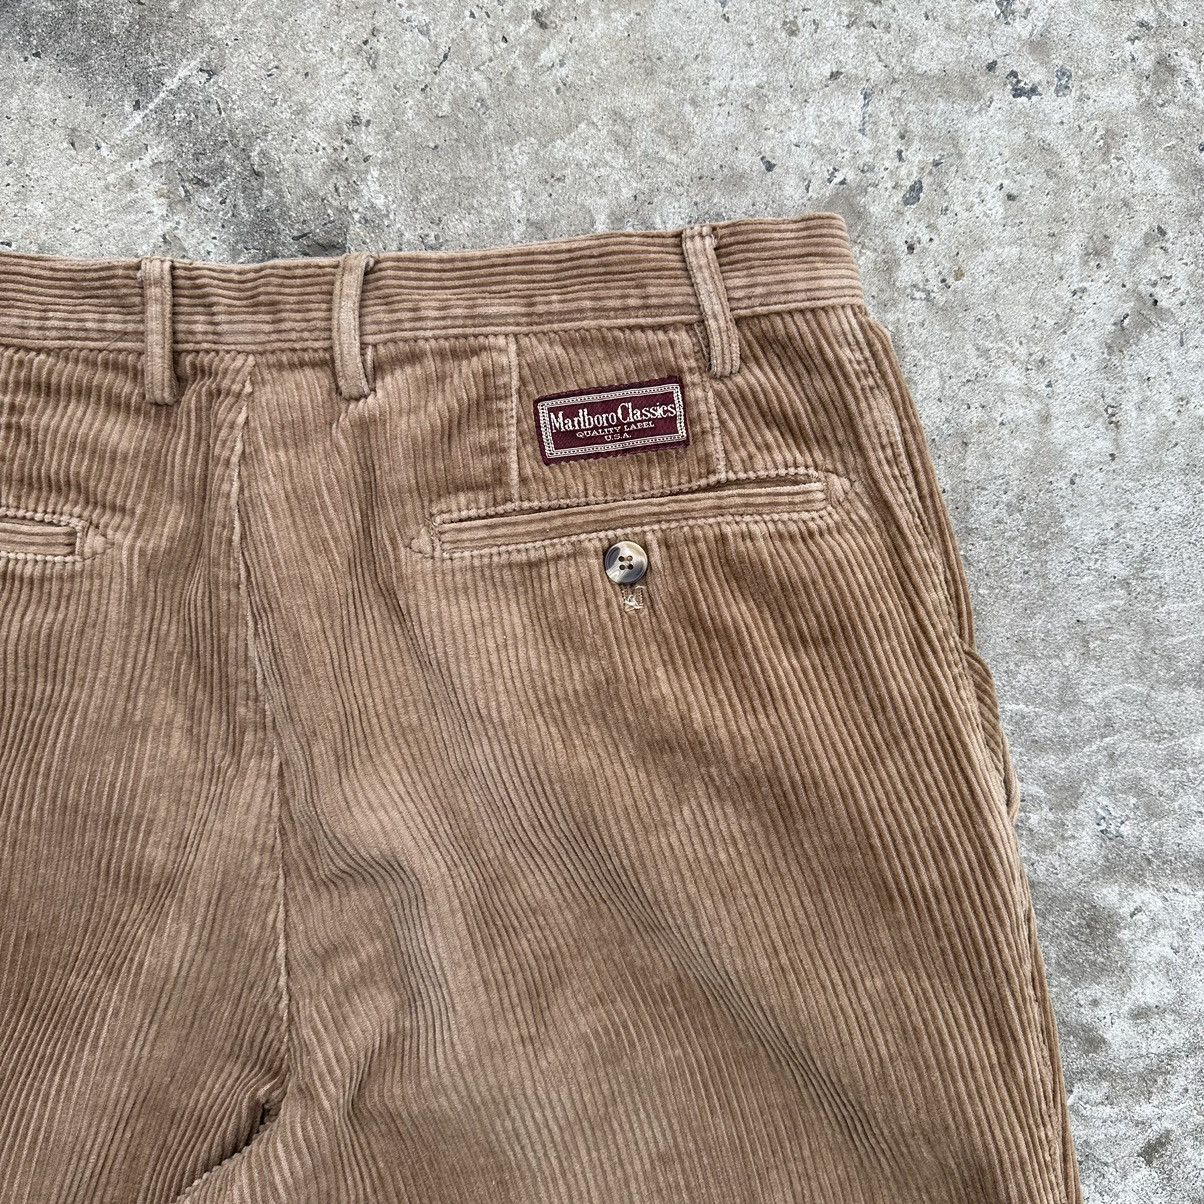 Vintage Vintage Corduroy Pants Marlboro Classic velveteen 90s Size US 32 / EU 48 - 14 Thumbnail